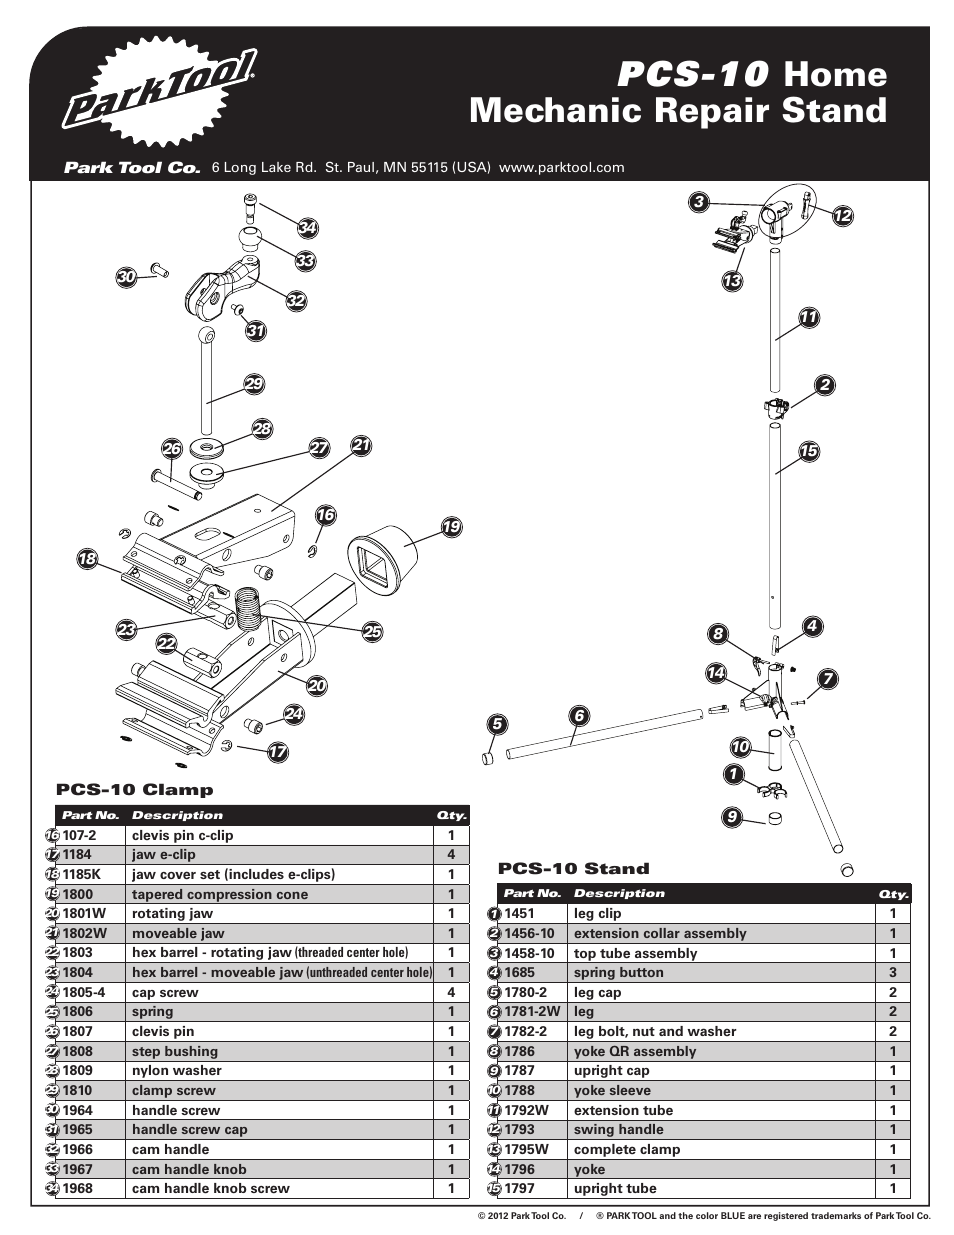 Pcs-10 home mechanic repair stand | Park Tool PCS-10 User Manual | Page 4 /  4 | Original mode